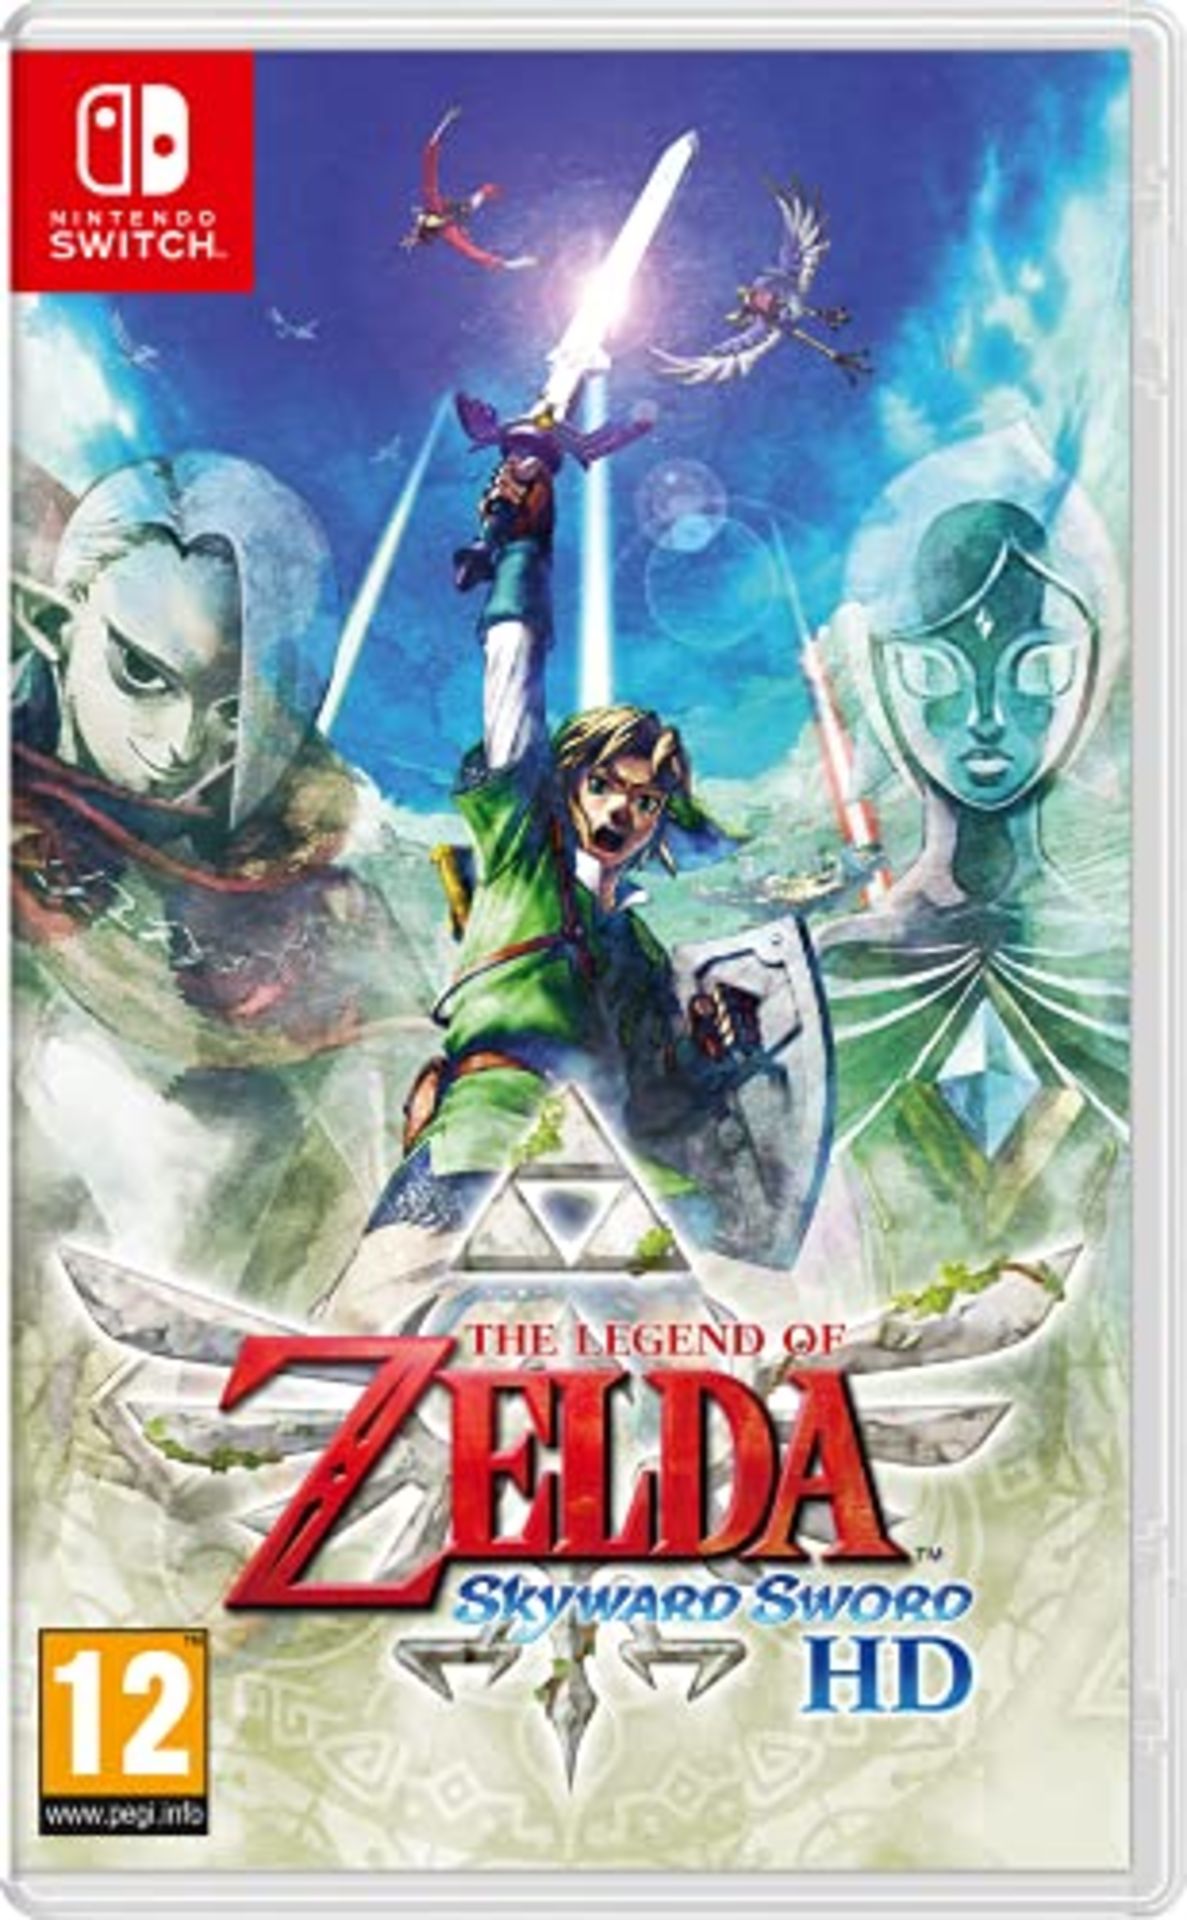 The Legend of Zelda: Skyward Sword - HD - Nintendo Video Game - Italian Edition - Cart - Image 4 of 6